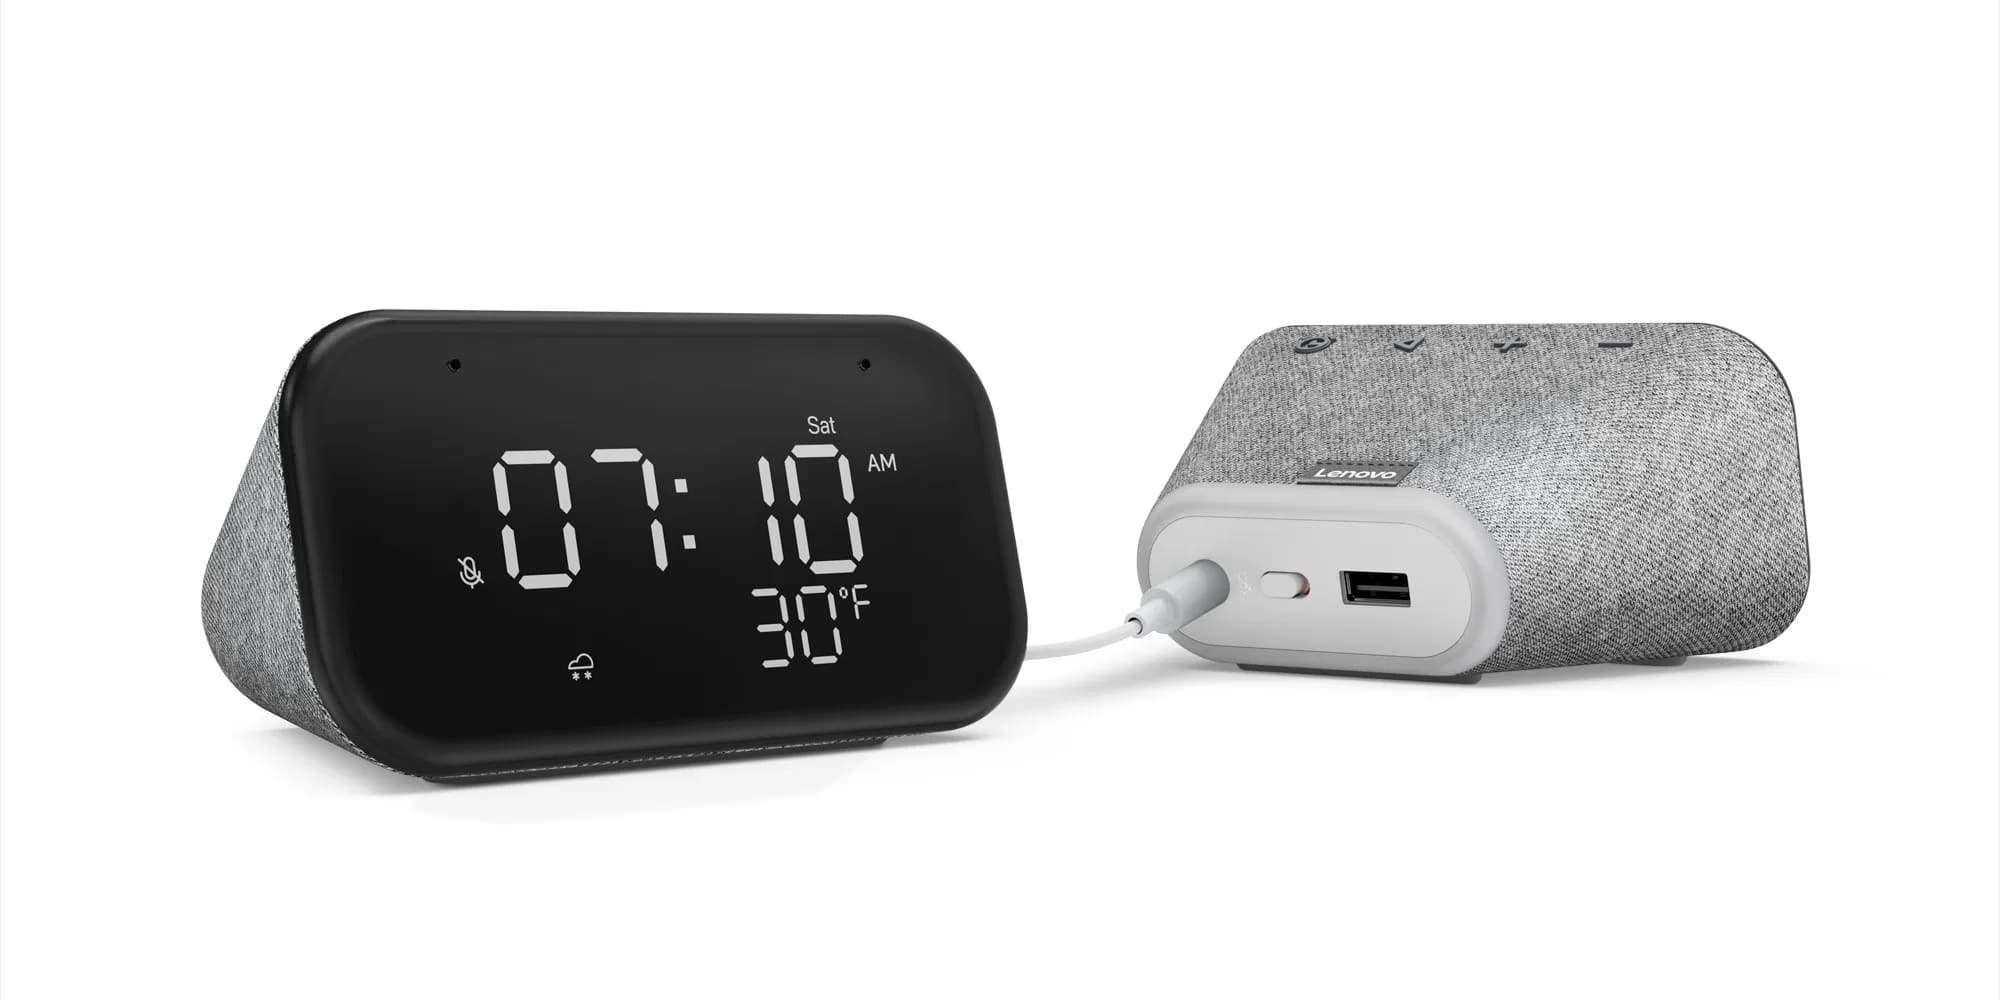 Lenovo Unveils An Amazon Alexa Like Smart Clock